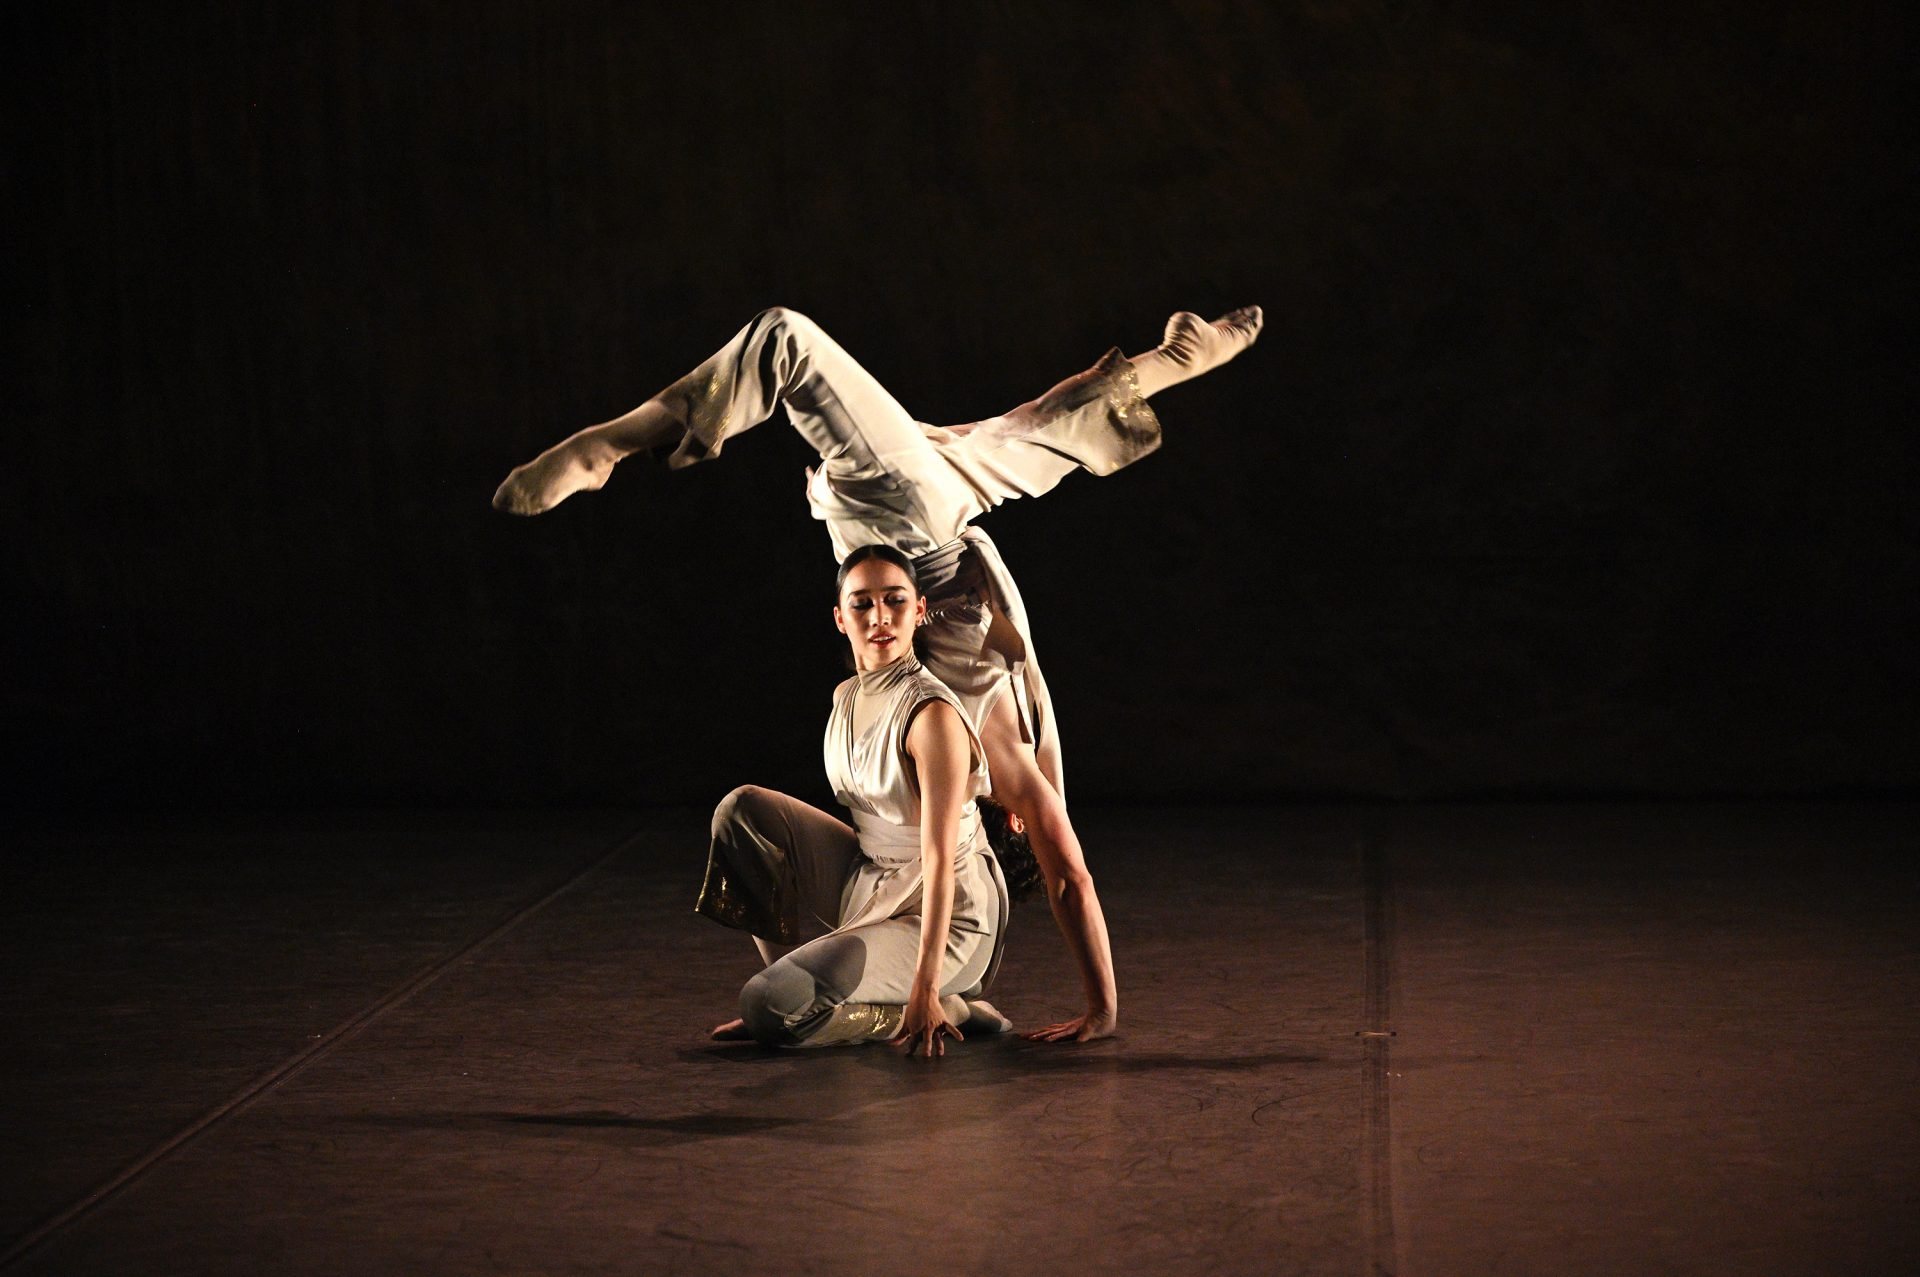 Ashley Coupal and Noam Durand dancing Ceyda Tanc's NEFES in Emerging Dancer 2022 (c) Laurent Liotardo (2)